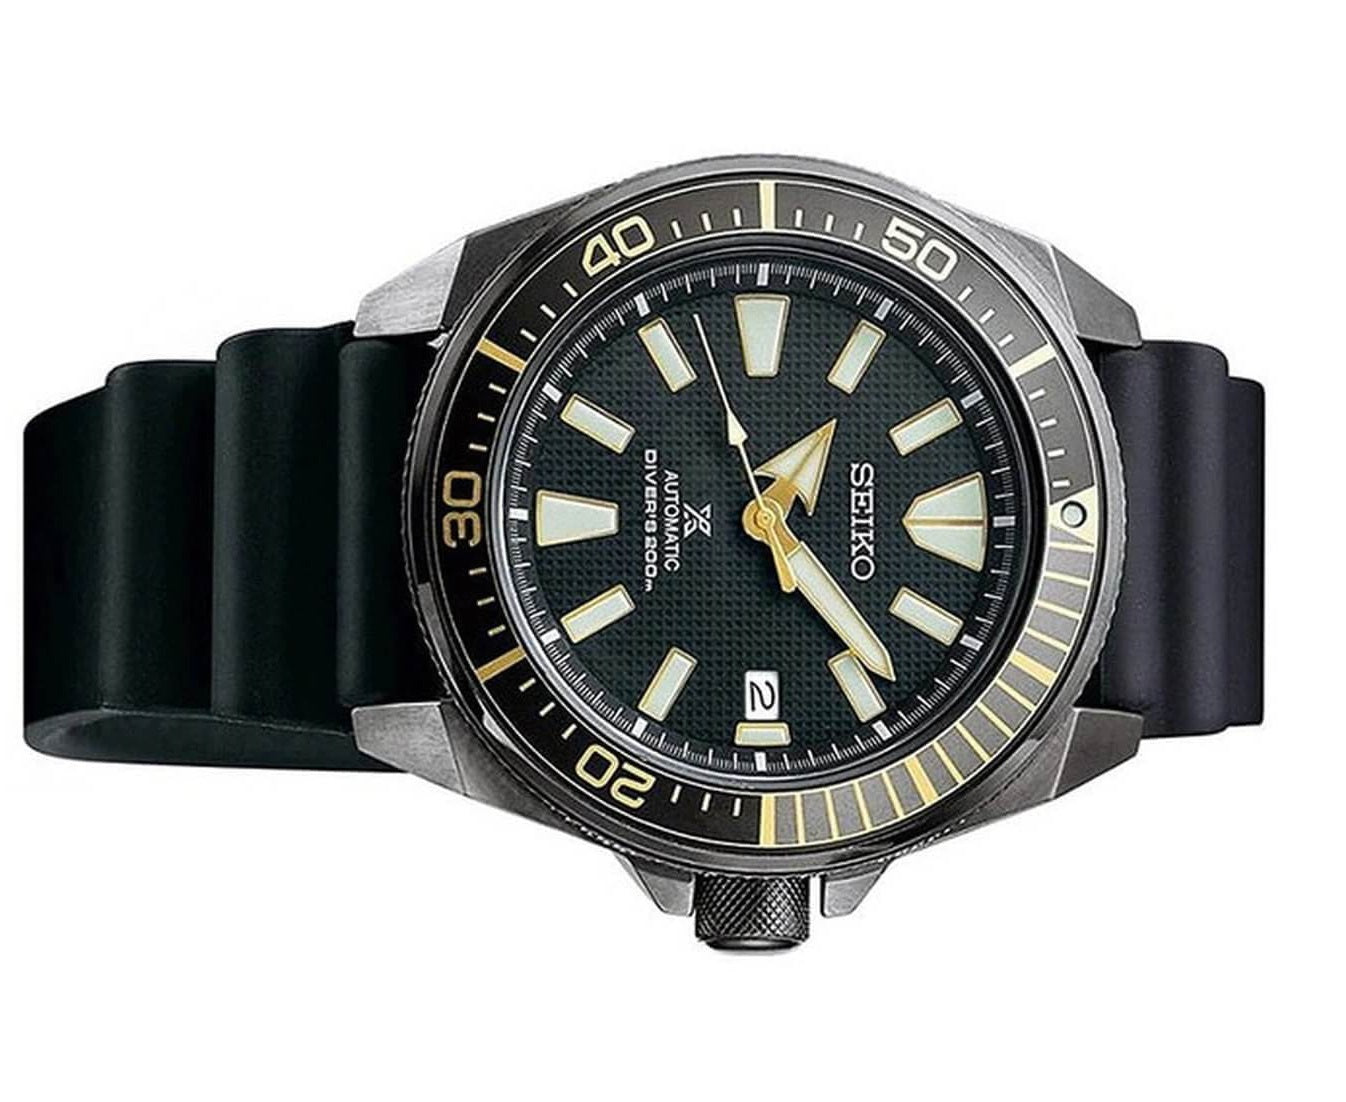 SEIKO Prospex Samurai SRPB55K1 Automatic Diver Watch for Men-Watch Portal Philippines